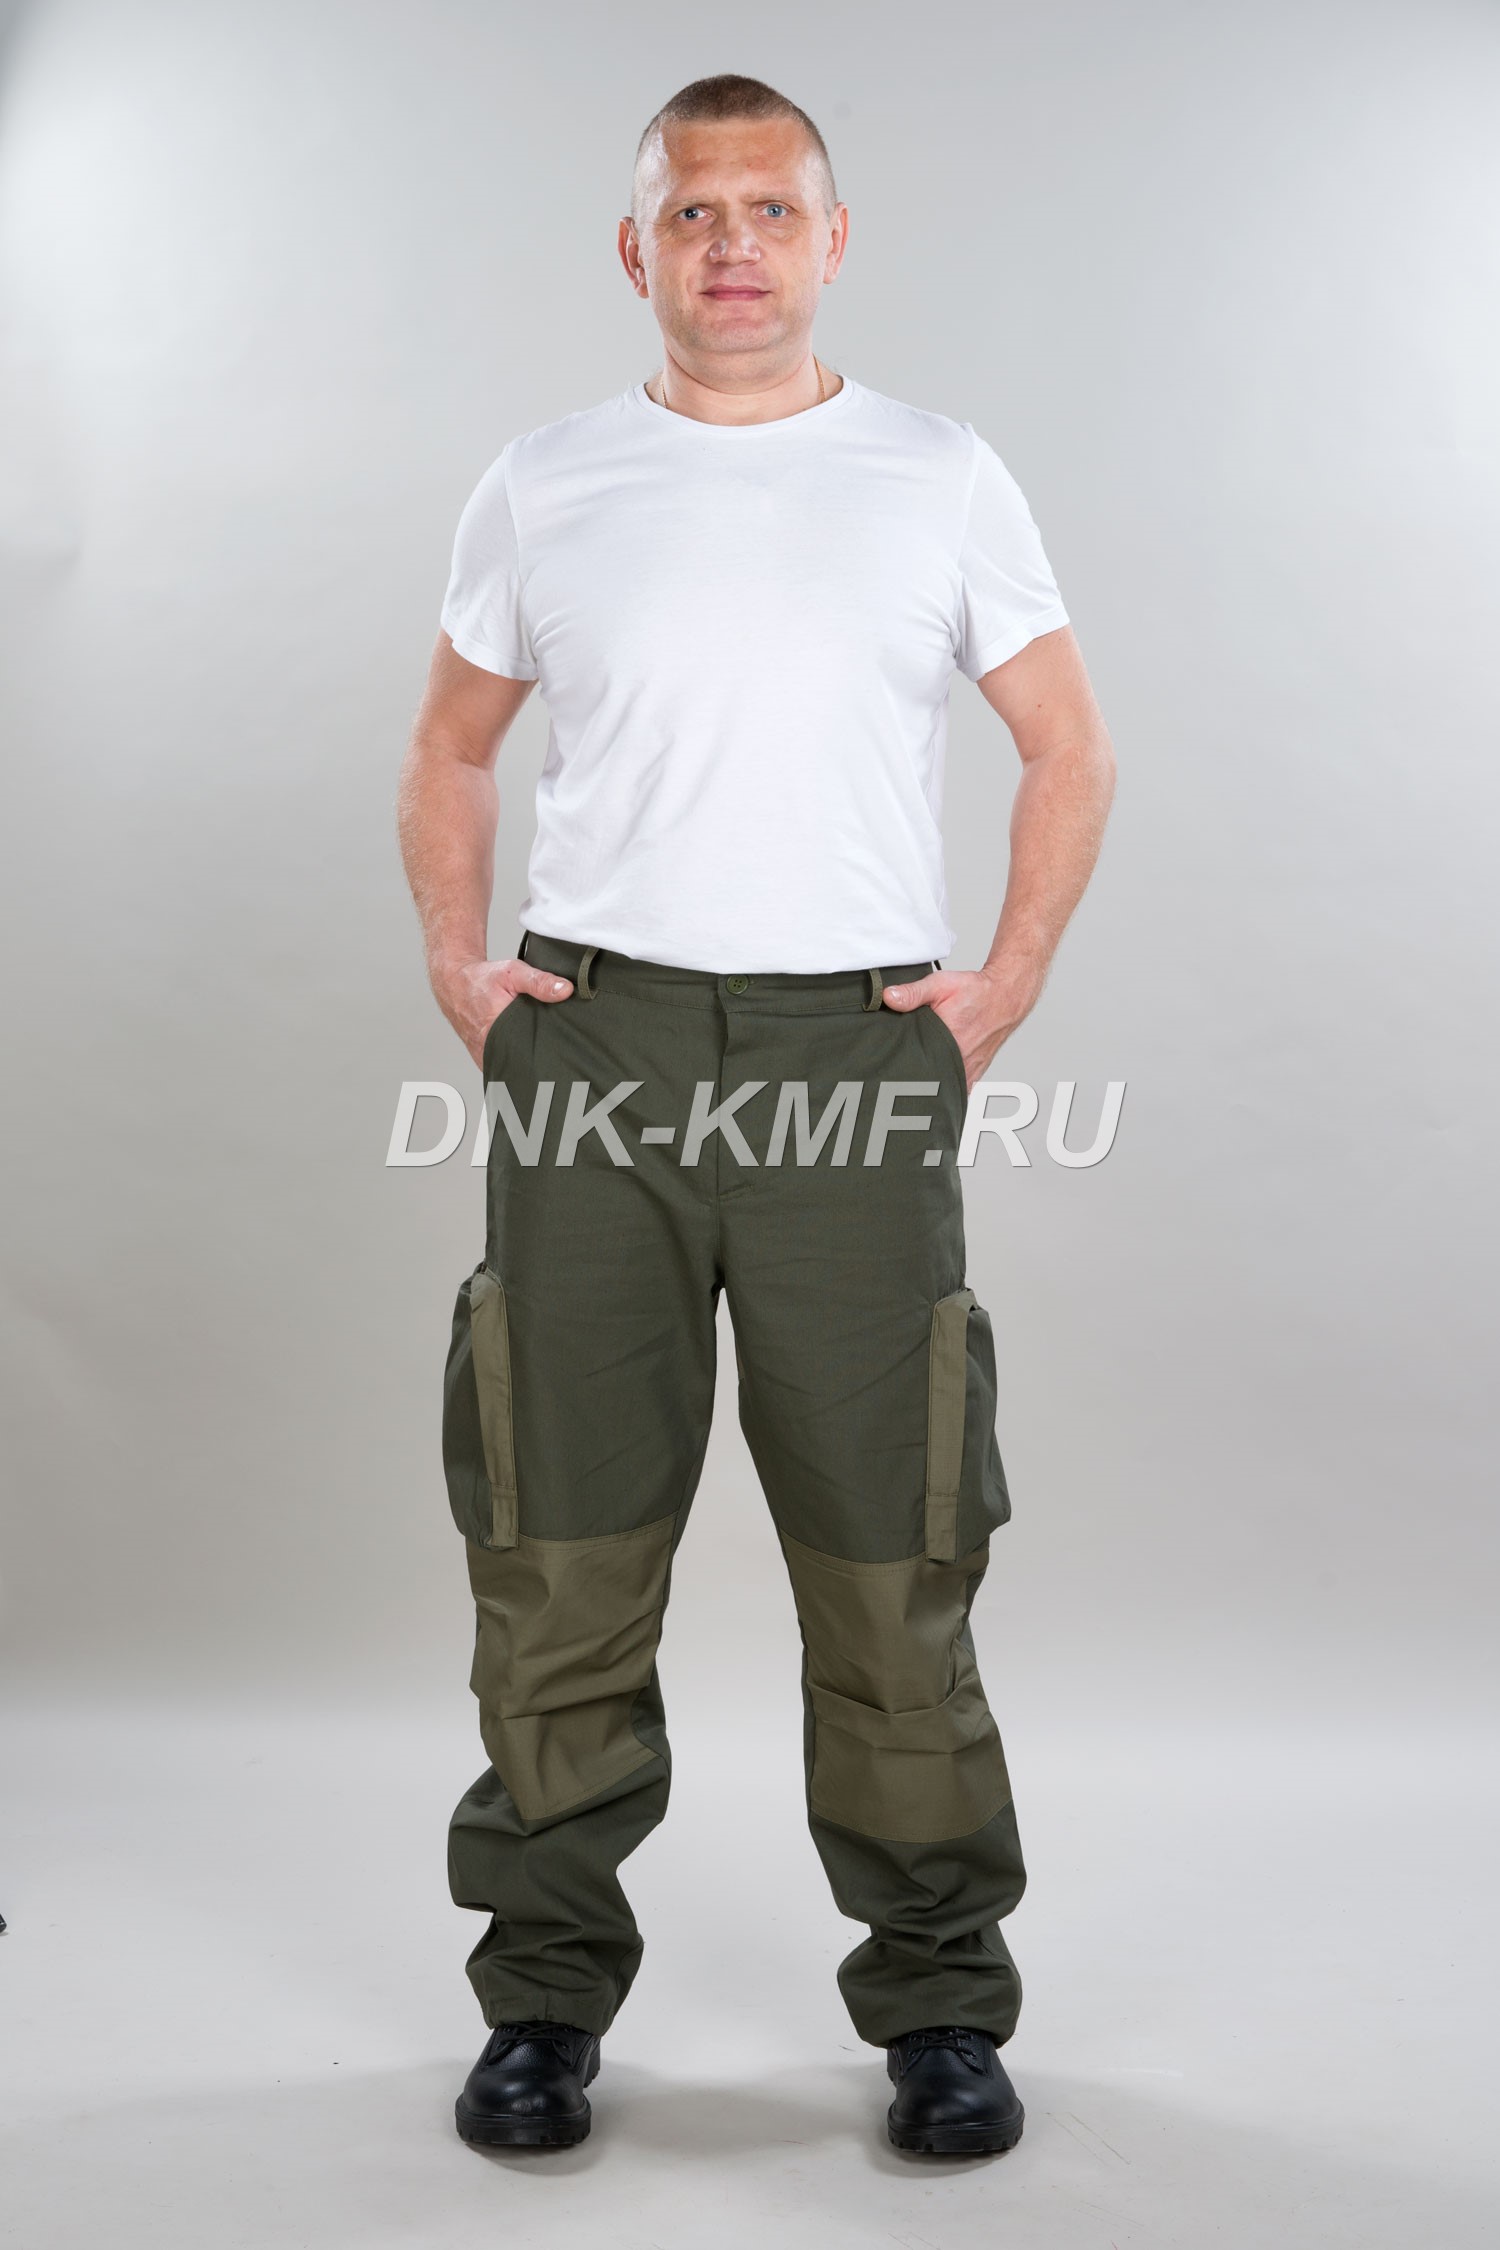 Брюки "Корсак", тк.палатка+Rip-Stop от интернет магазина dnk-kmf.ru, приобрести брюки "корсак", тк.палатка+rip-stop